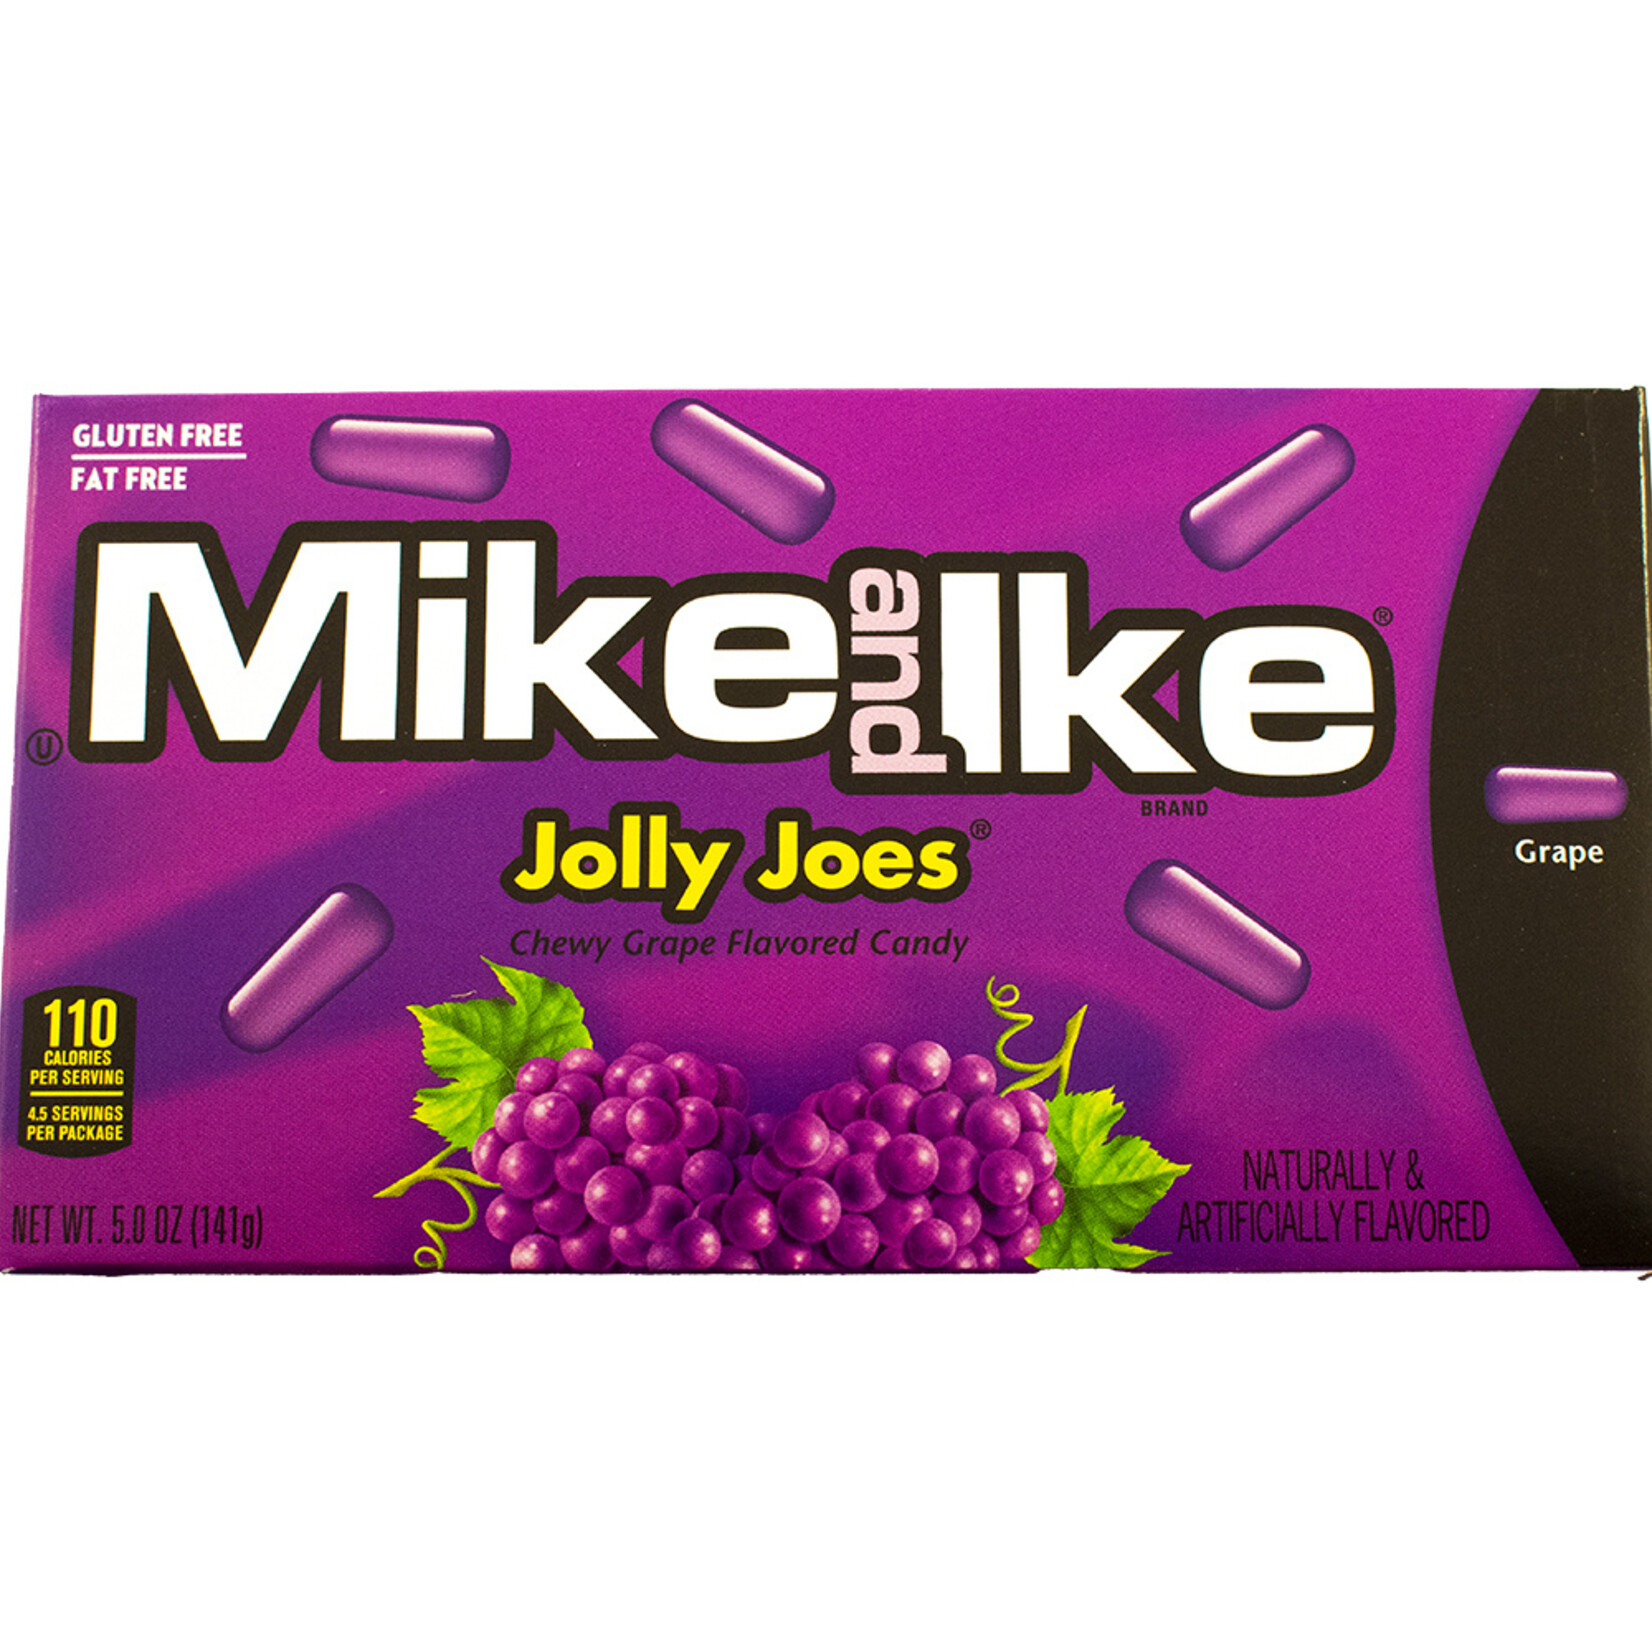 mike and ike Mike & Ike Grape 141g